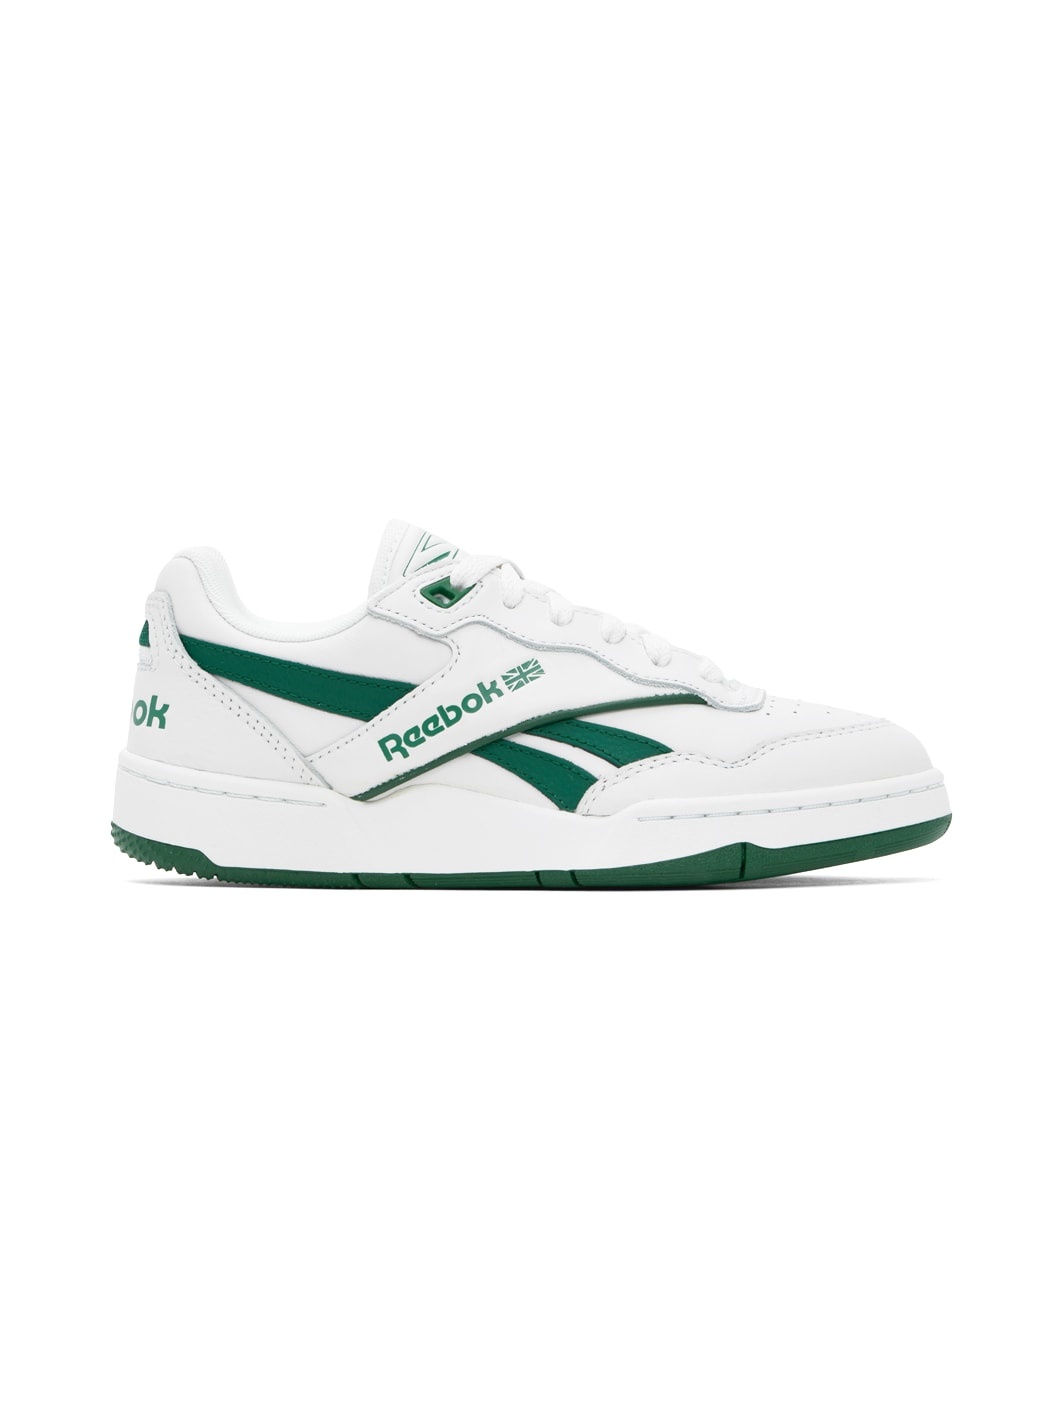 White & Green BB 4000 II Sneakers - 1